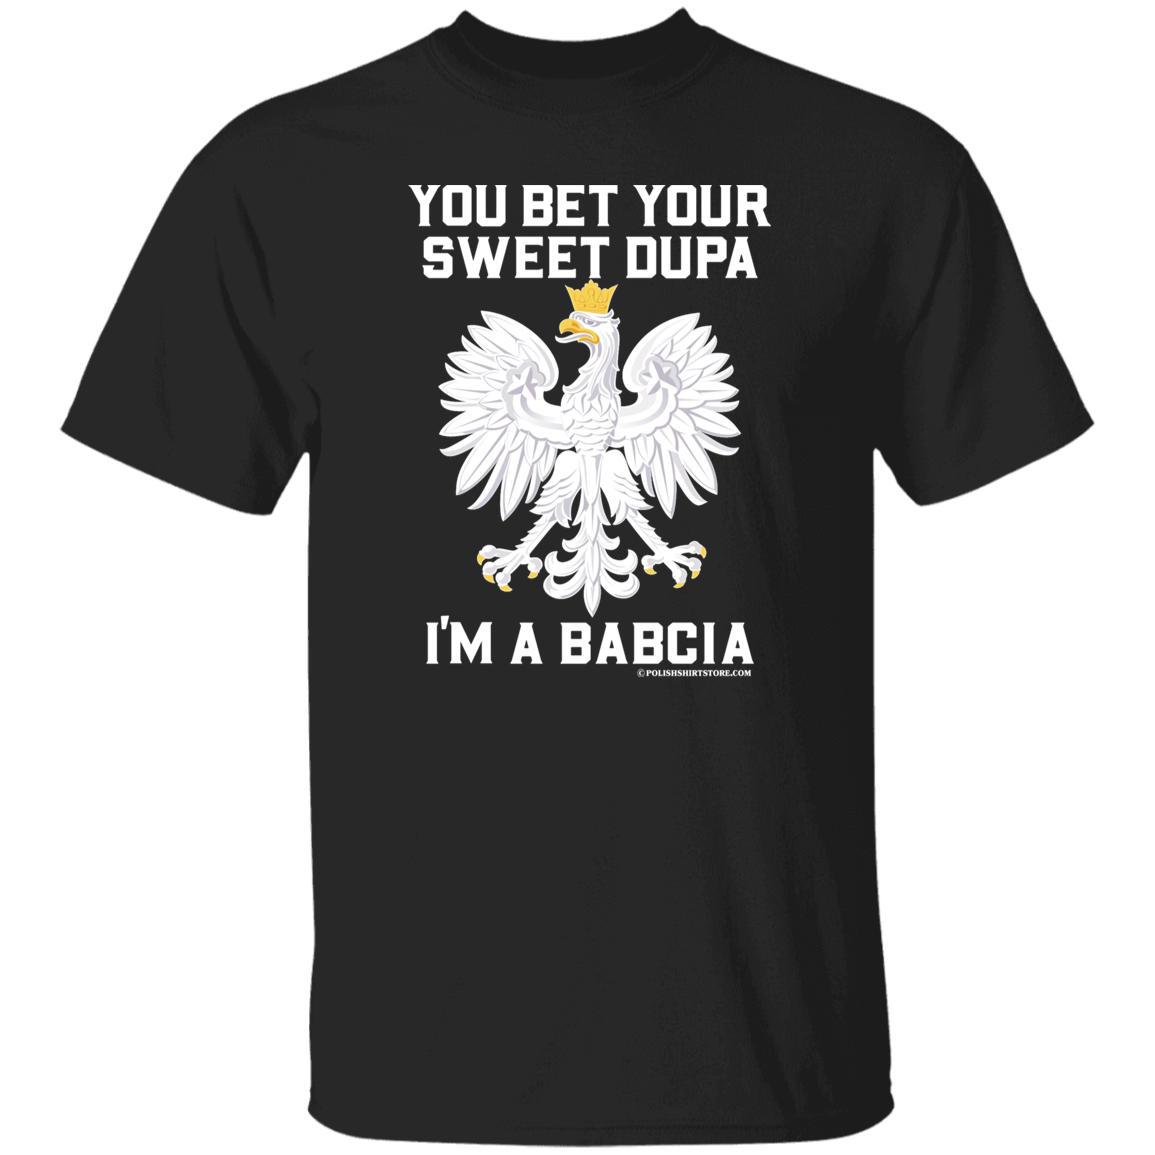 You Bet Your Sweet Dupa I'm A Babcia Apparel CustomCat G500 5.3 oz. T-Shirt Black S